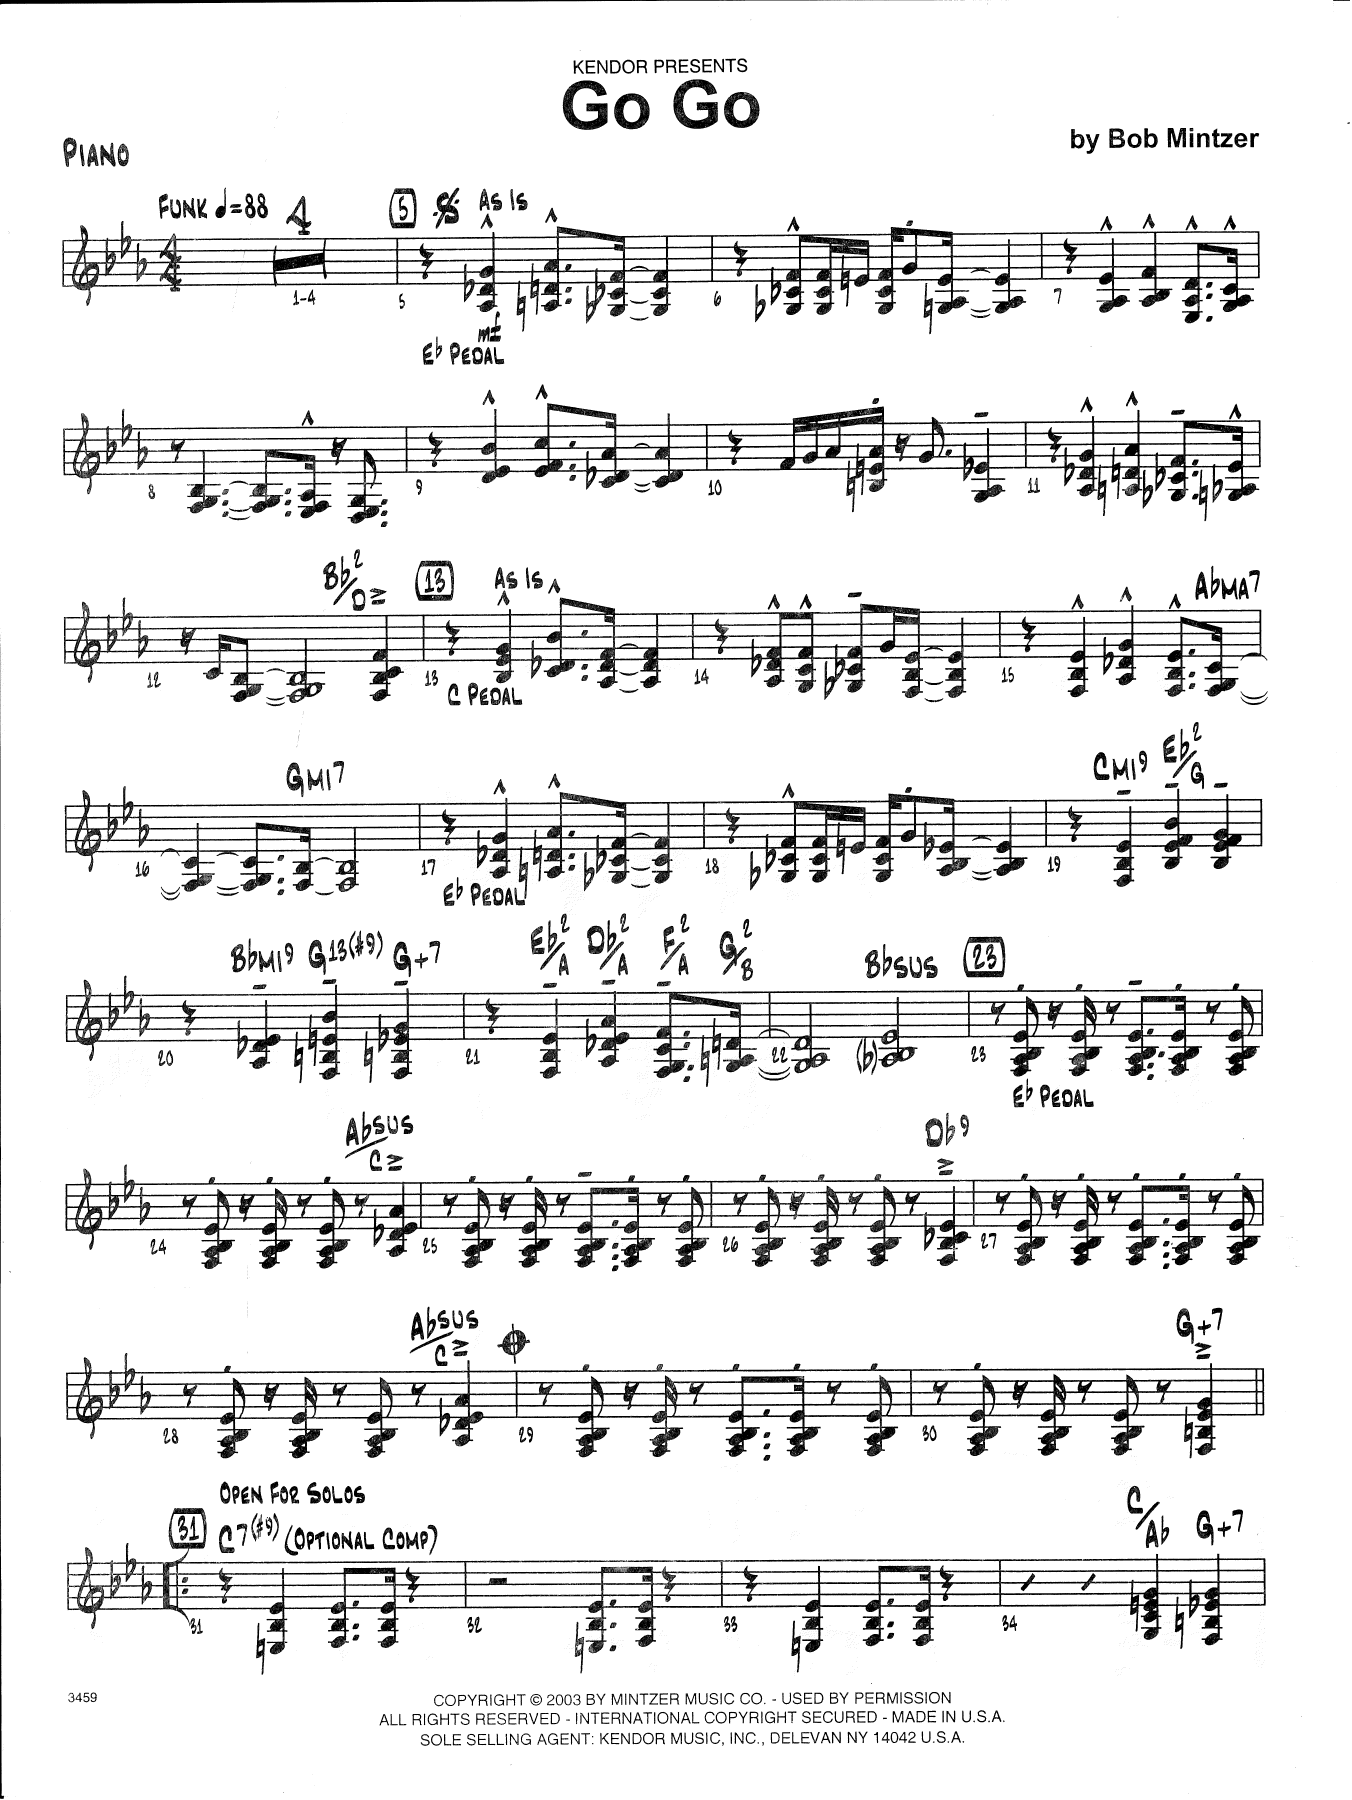 Download Bob Mintzer Go Go - Piano Sheet Music